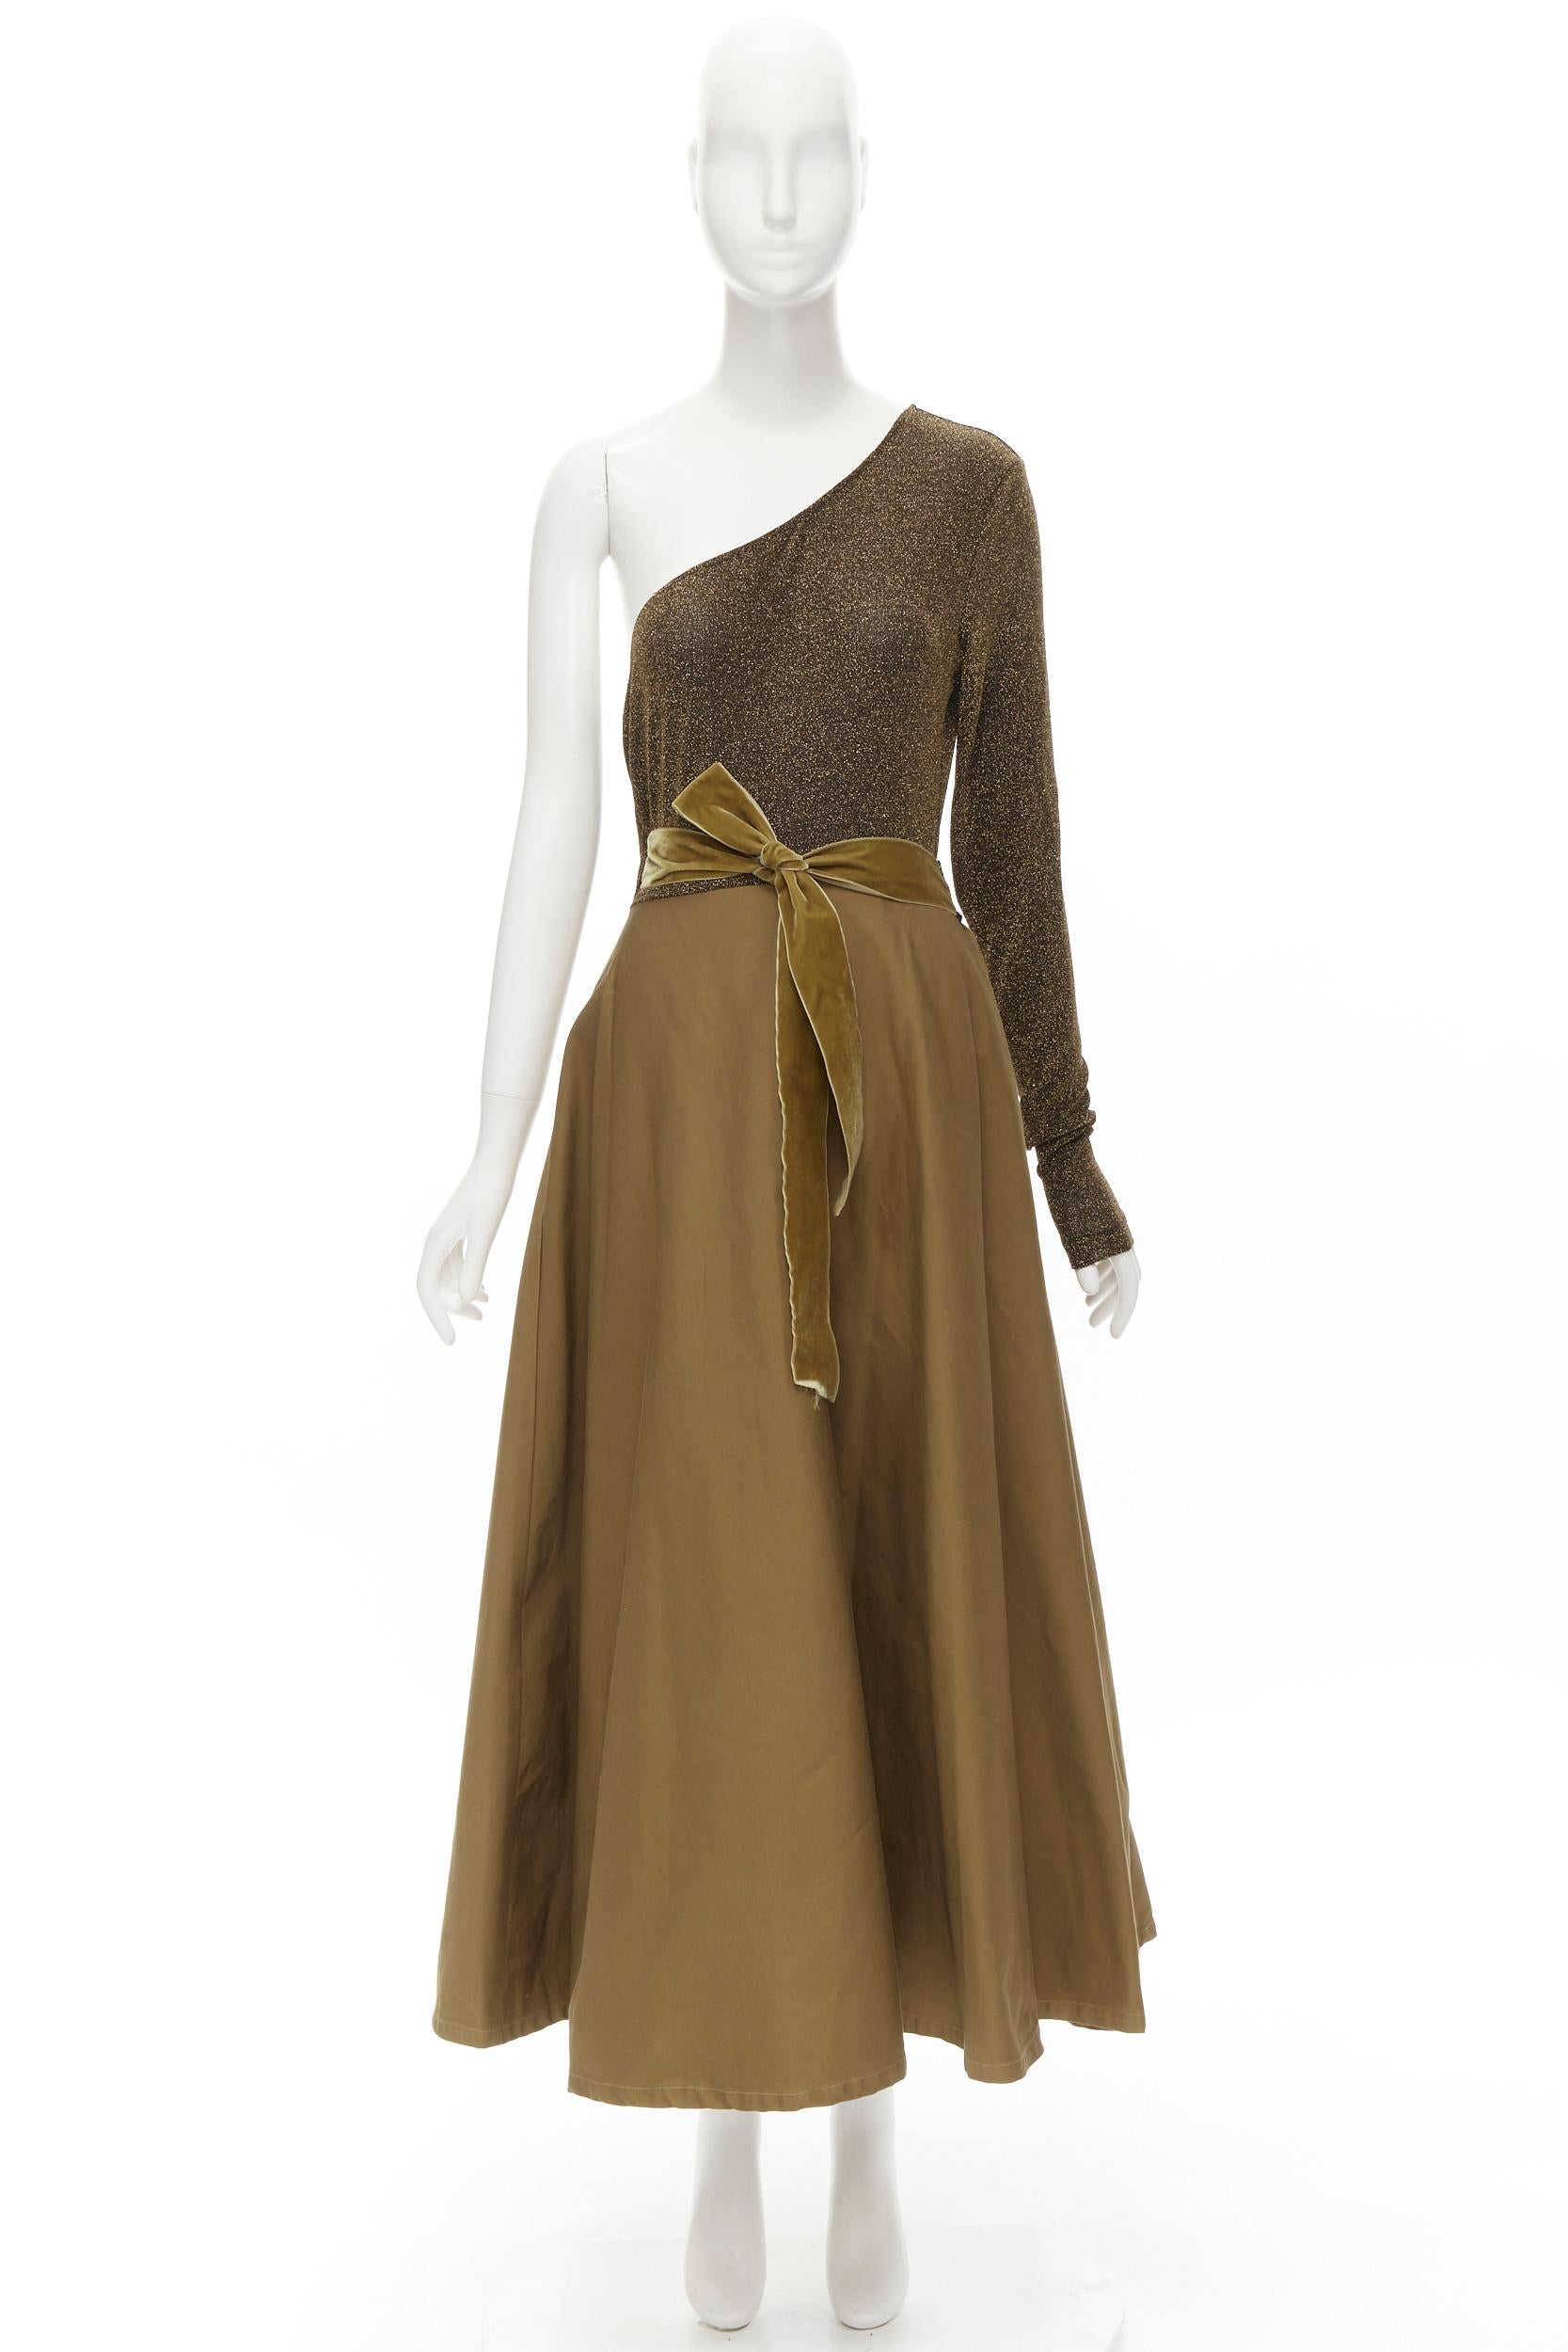 ARTCLUB Casa Miller gold lurex brown cotton twill wrap maxi dress M For Sale 5